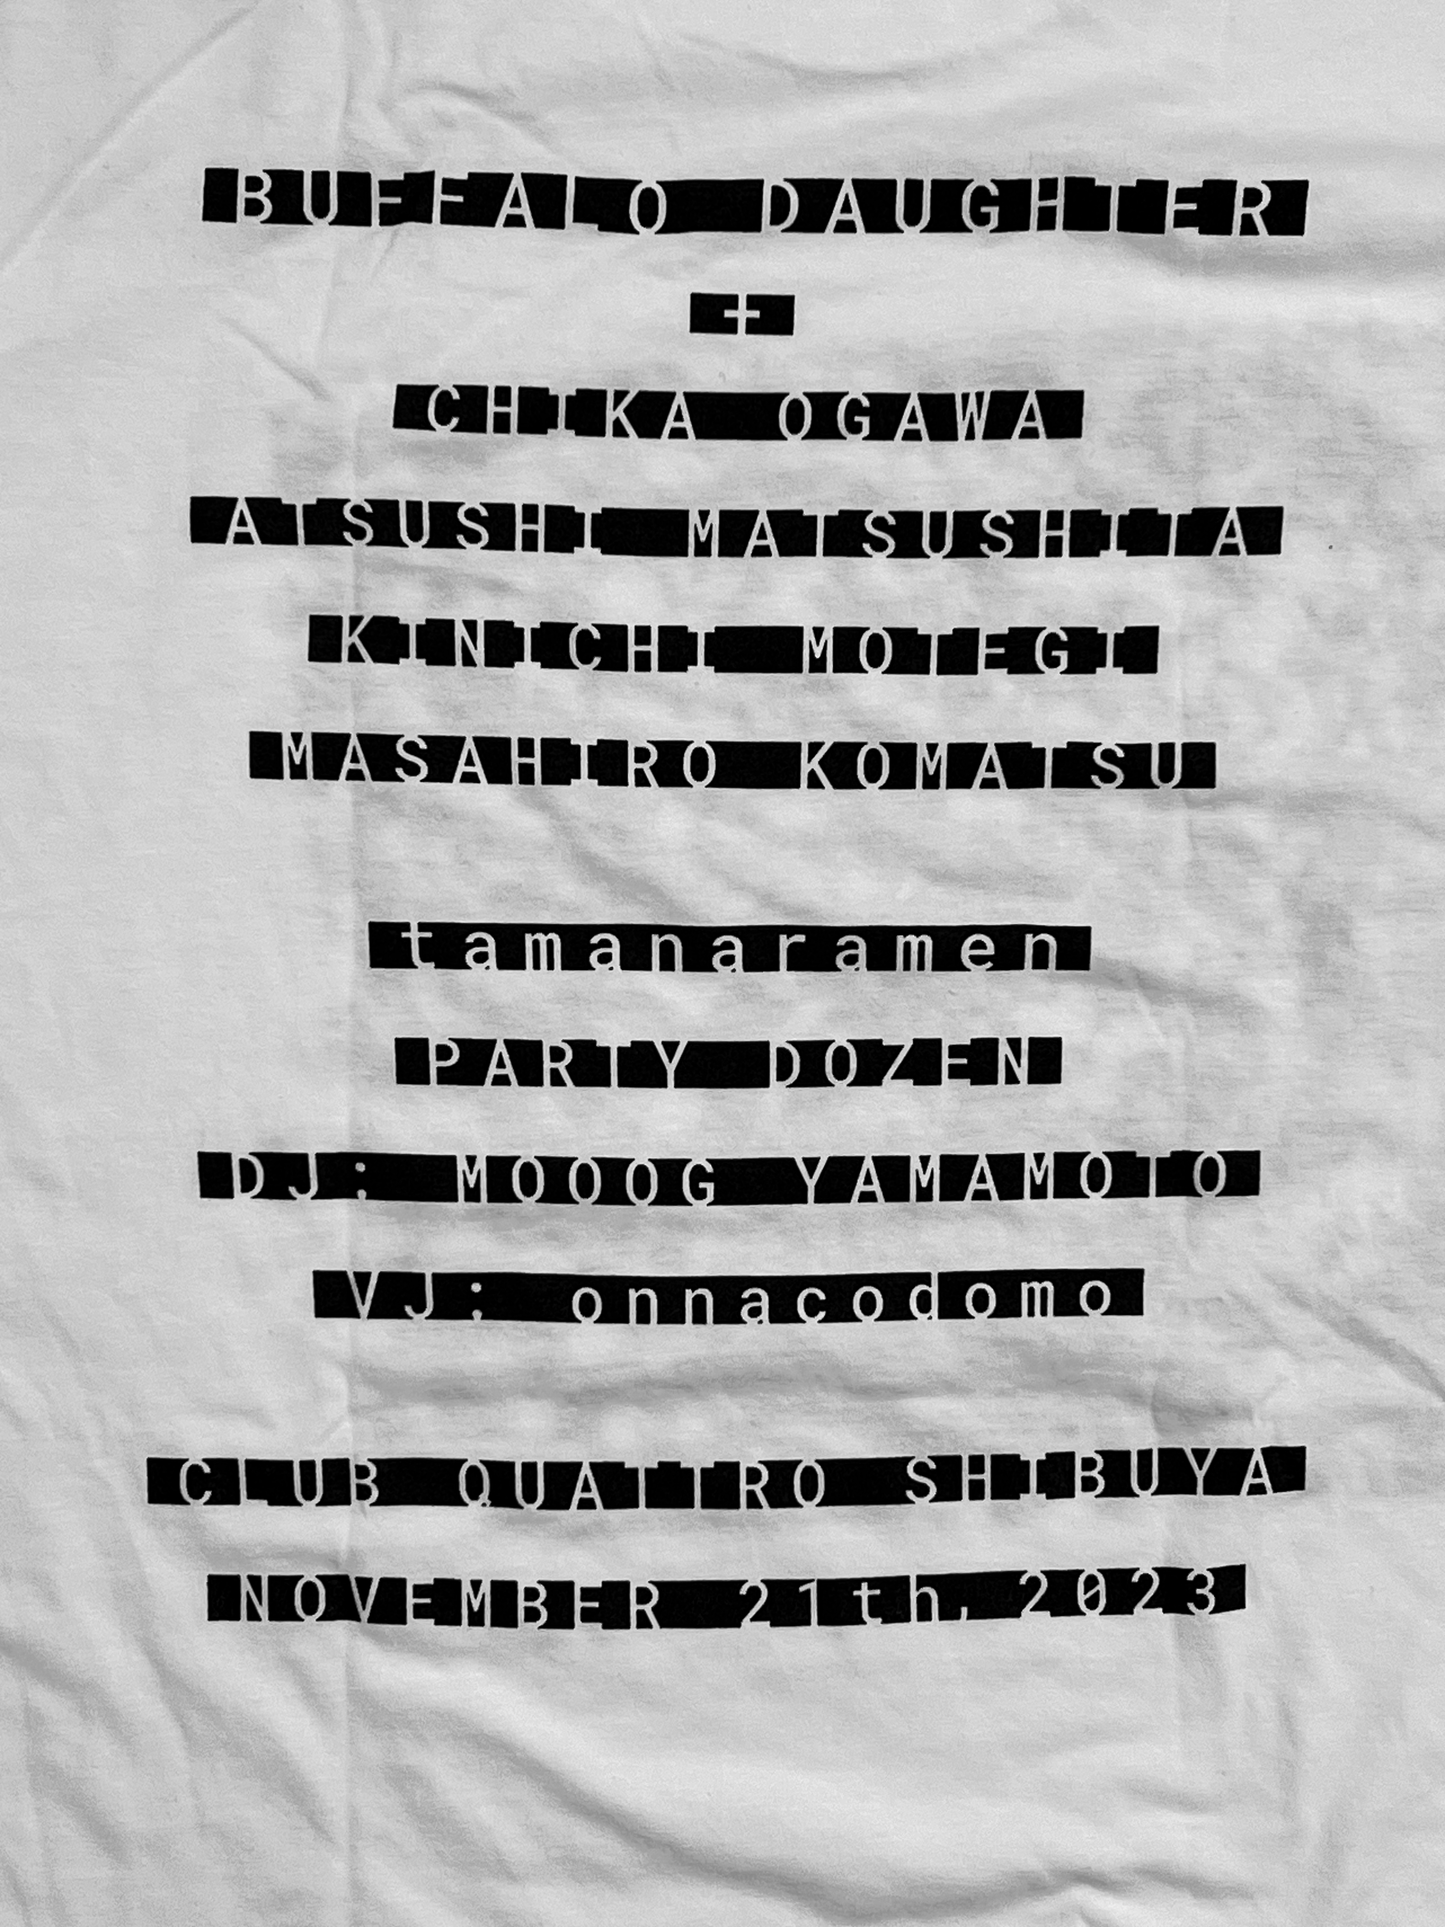 Buffallo Daughter「30周年記念ライブ」Tシャツ